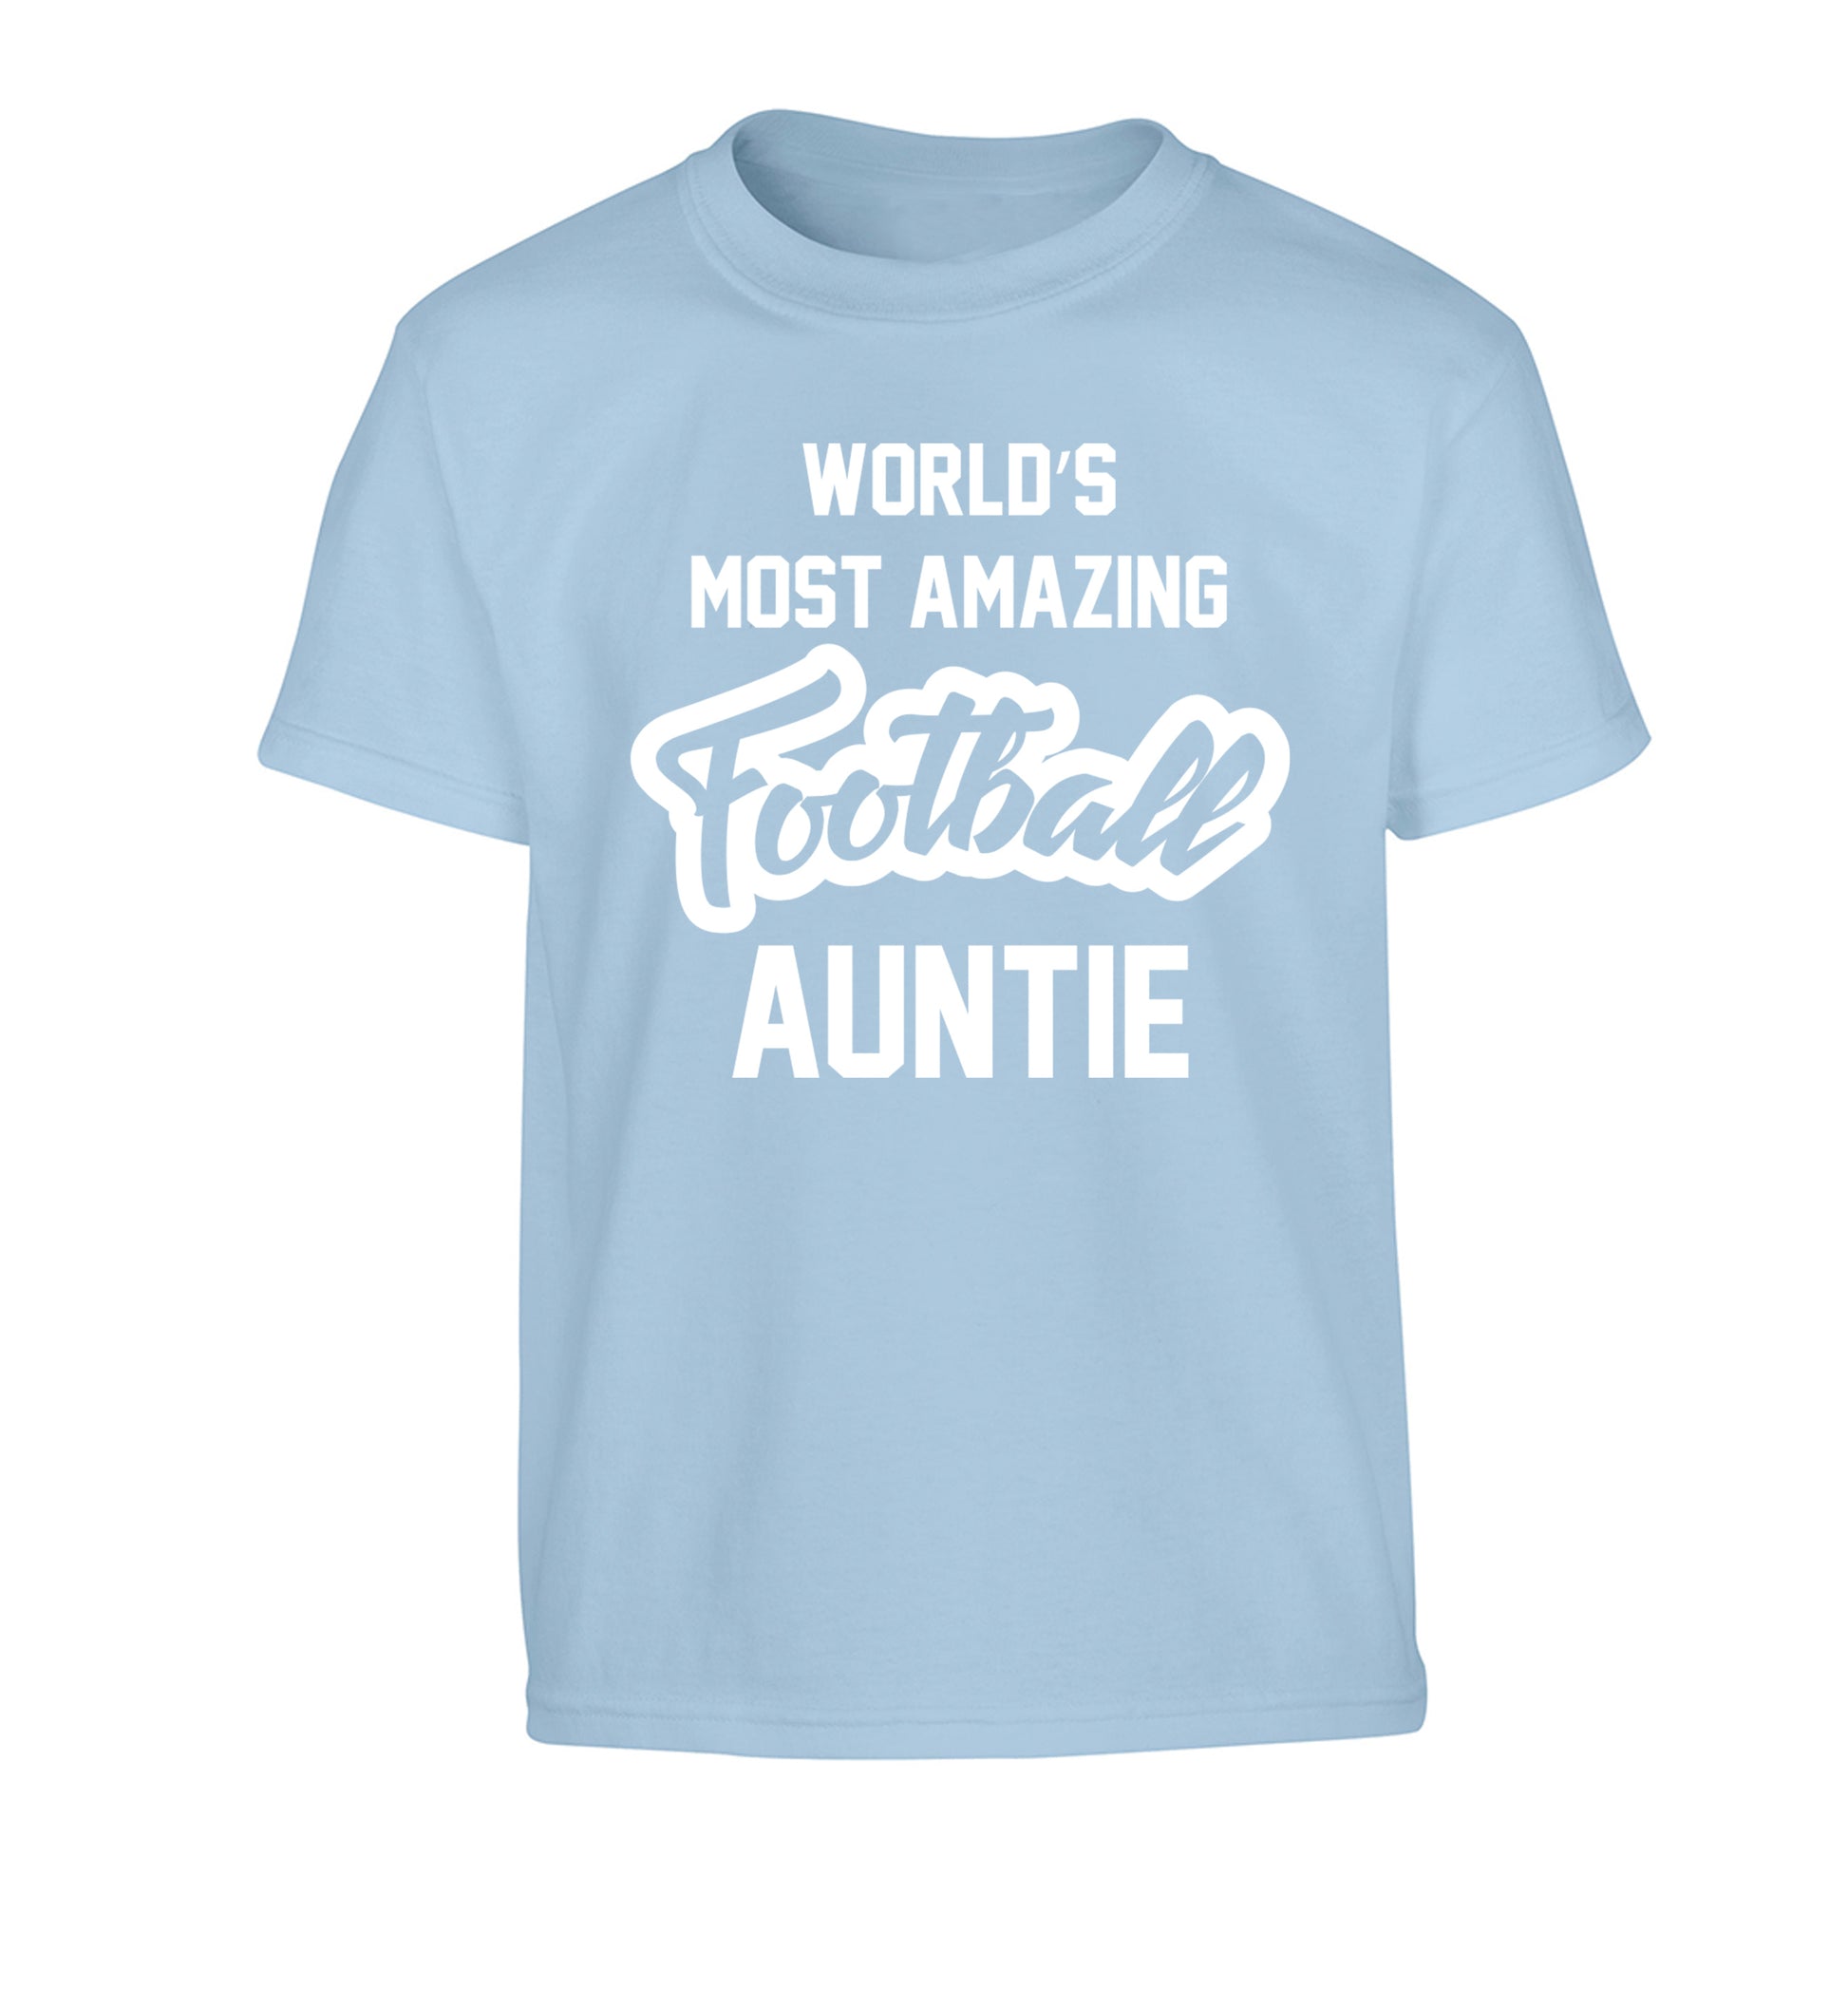 Worlds most amazing football auntie Children's light blue Tshirt 12-14 Years